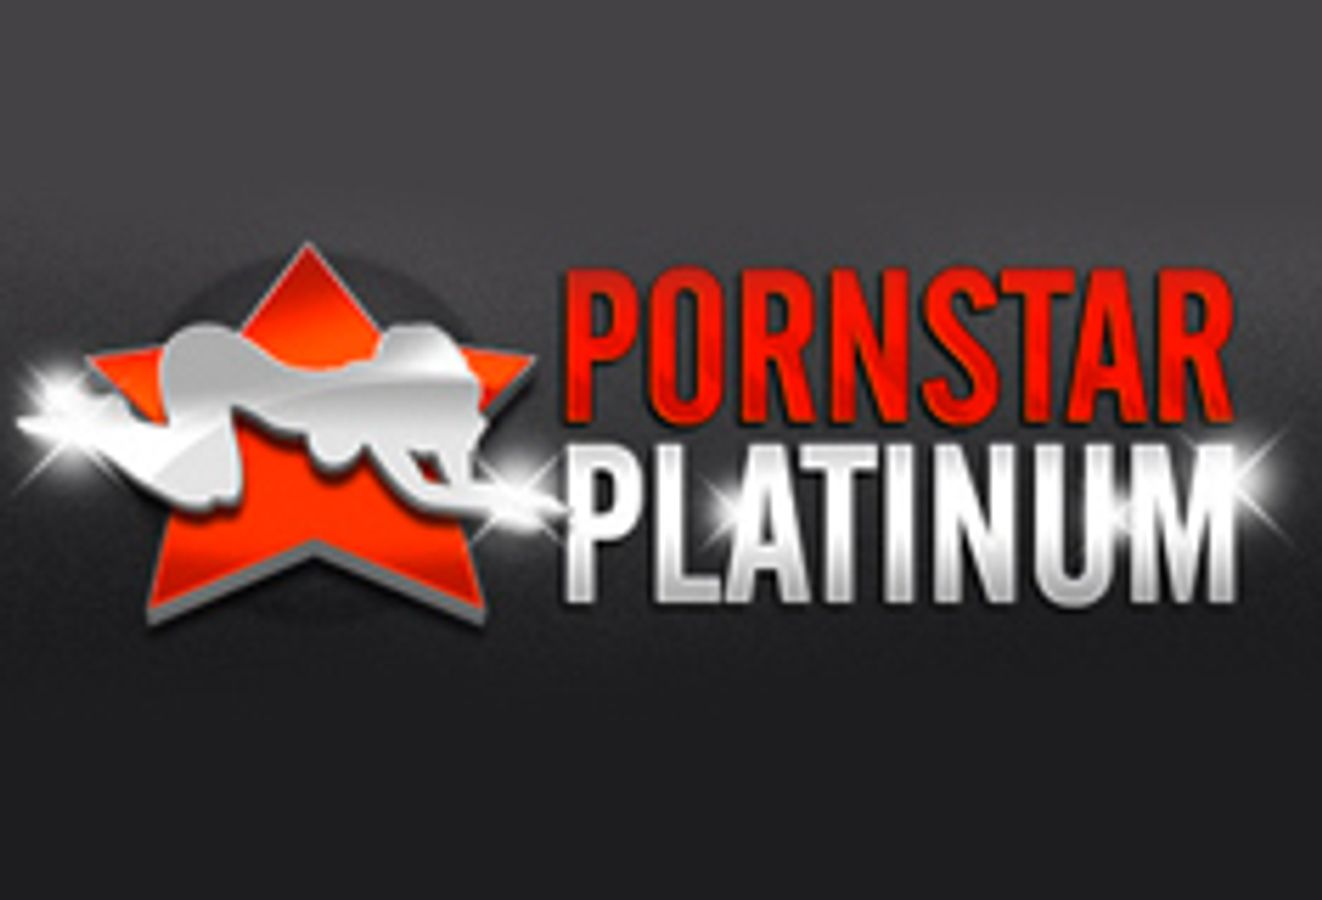 PornStarPlatinum.com